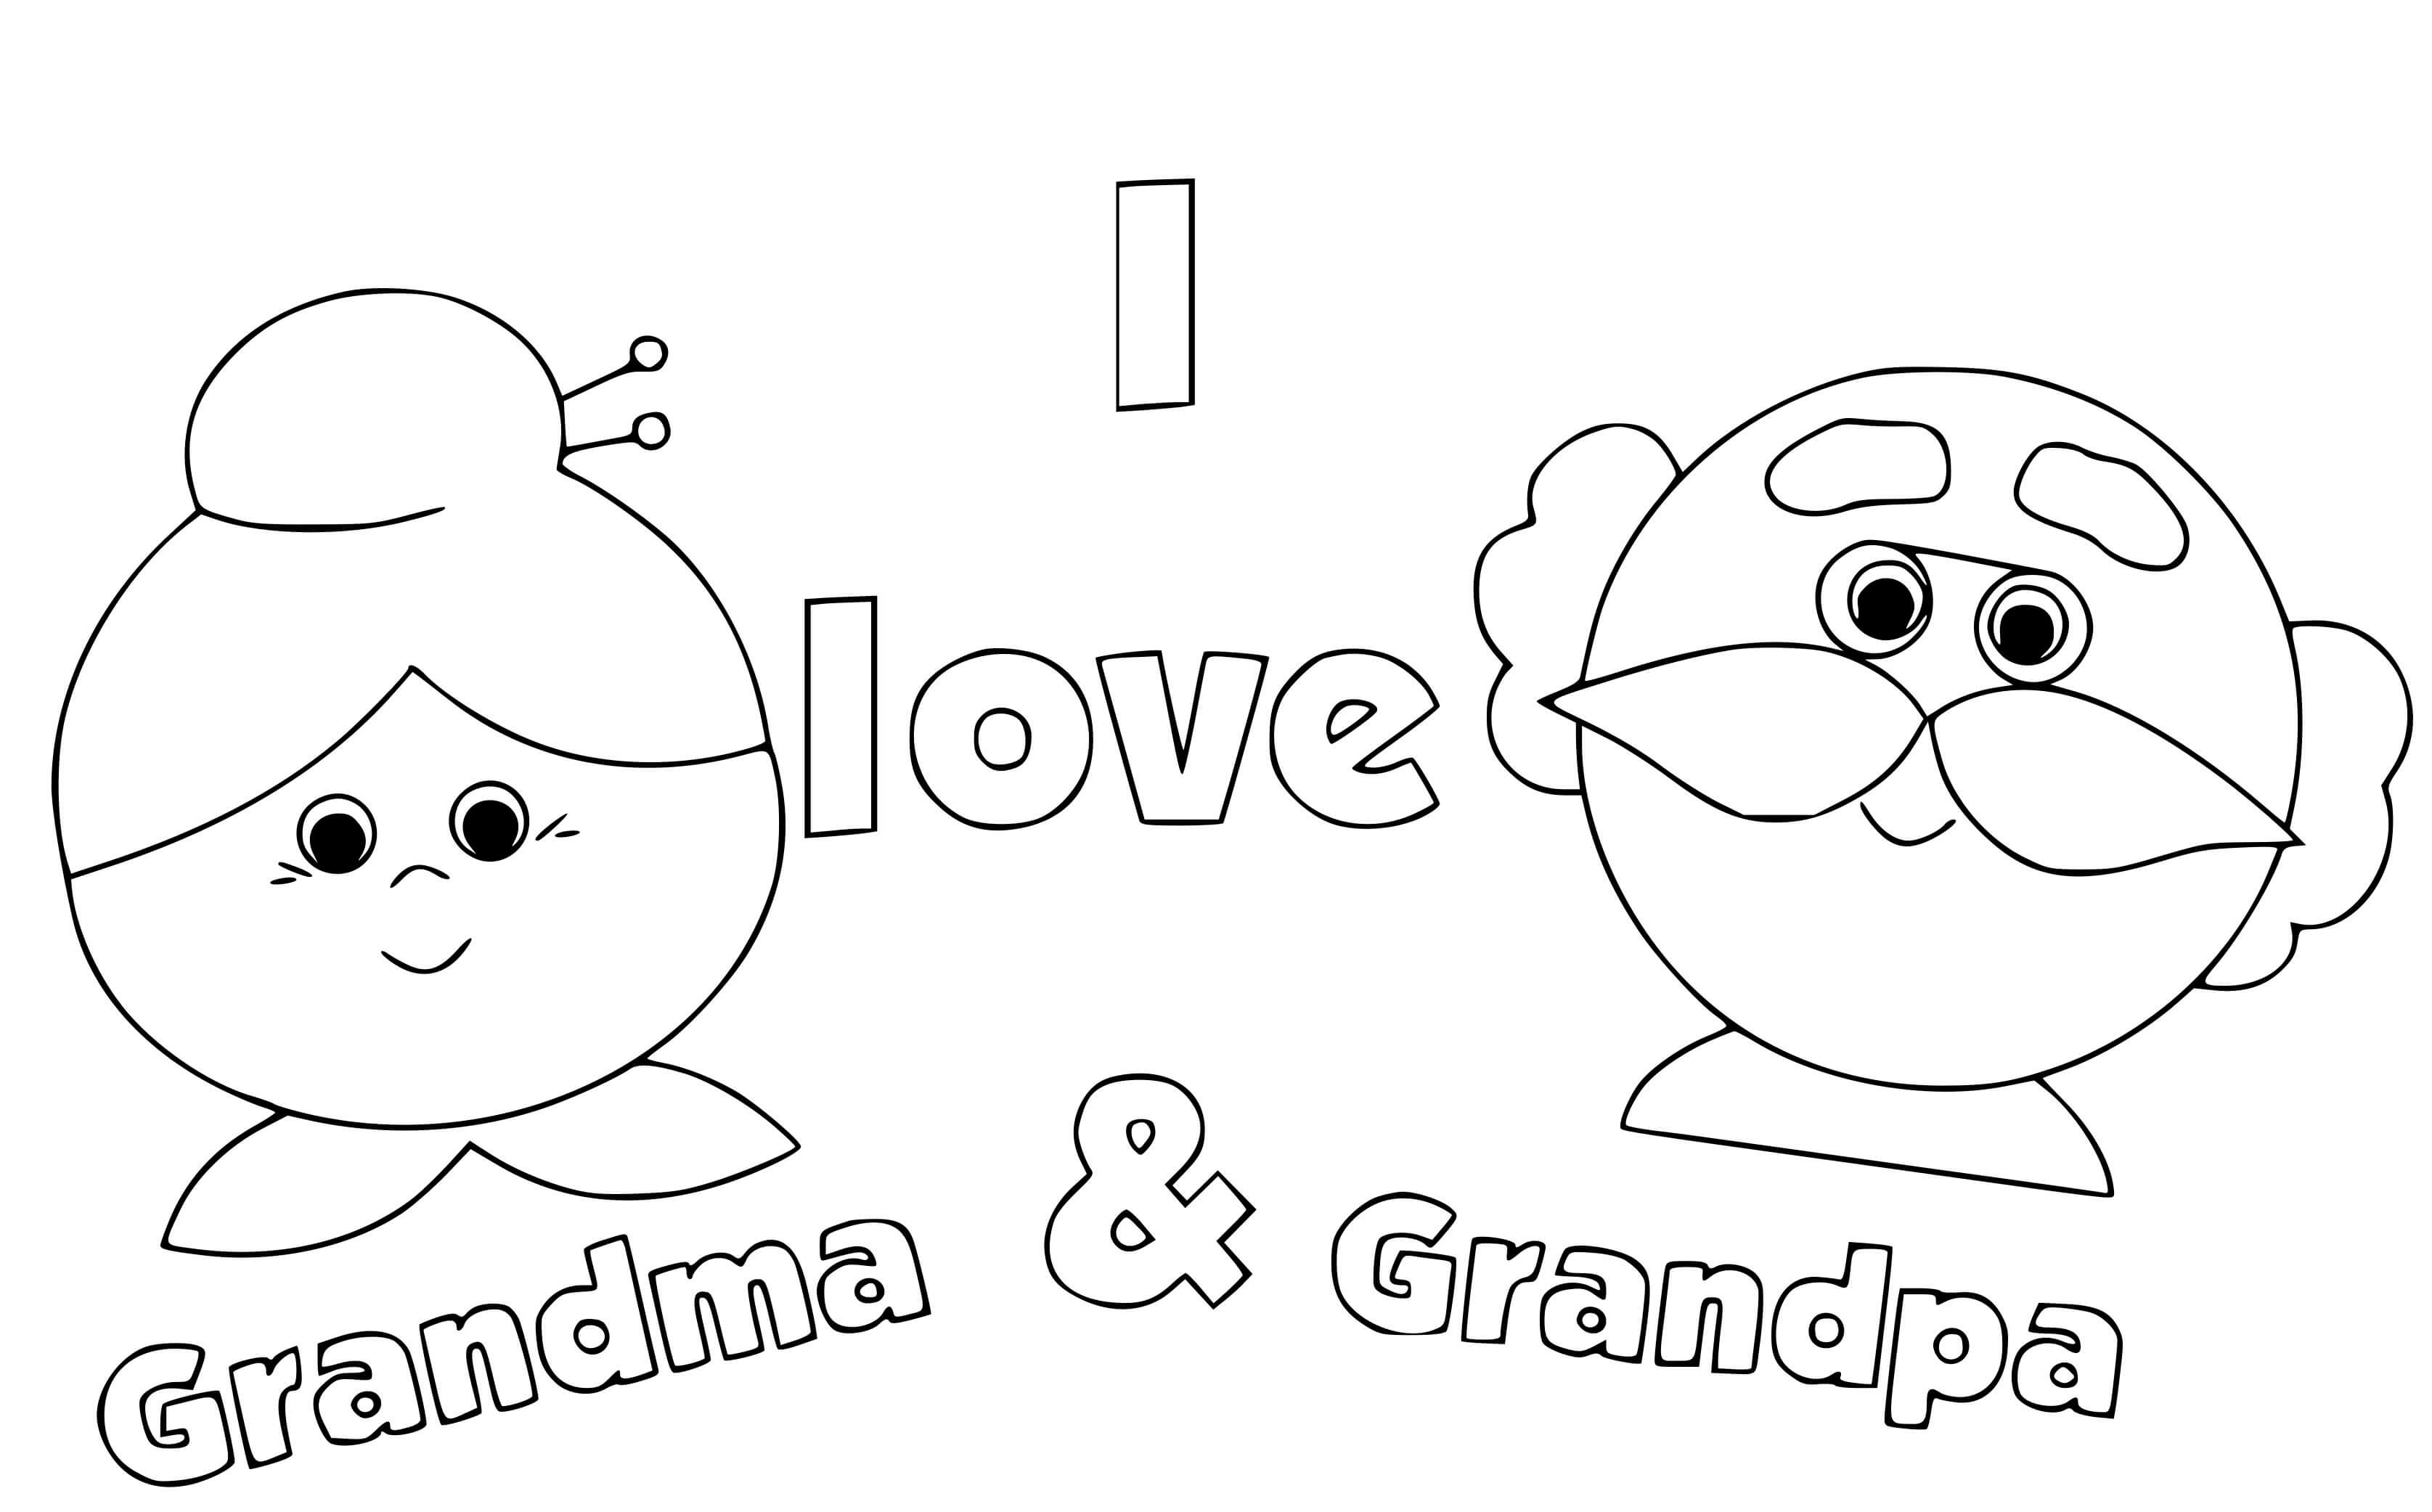   I love grandma and grandpa 